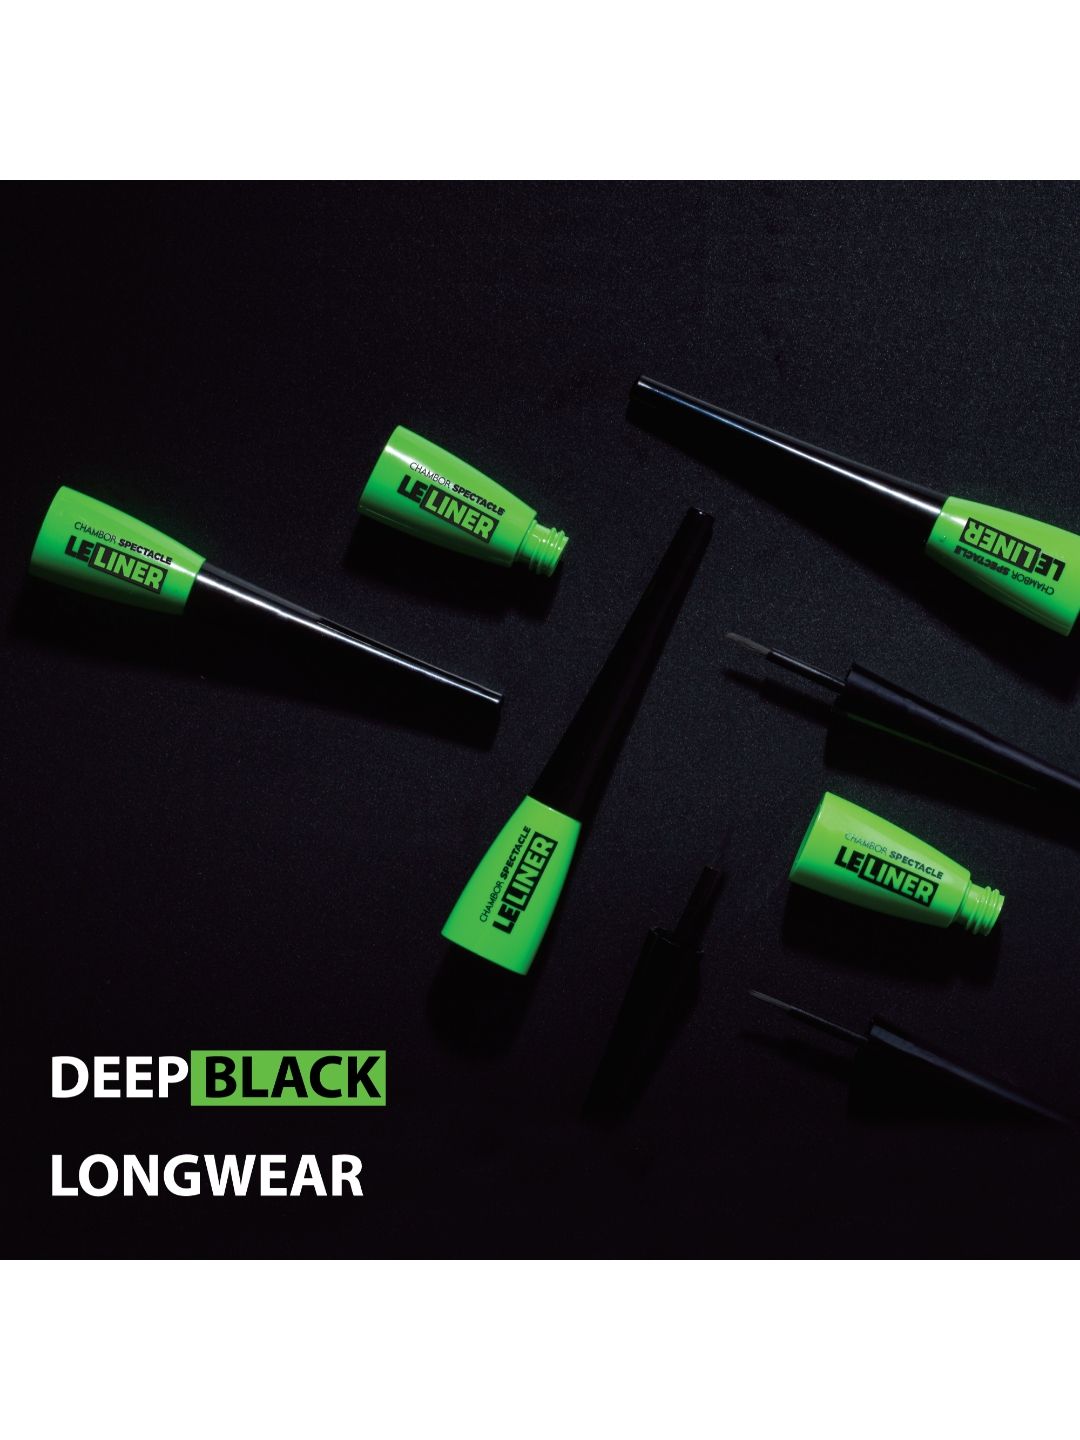 Chambor Spectacle Le Liner Waterproof - Deep Black